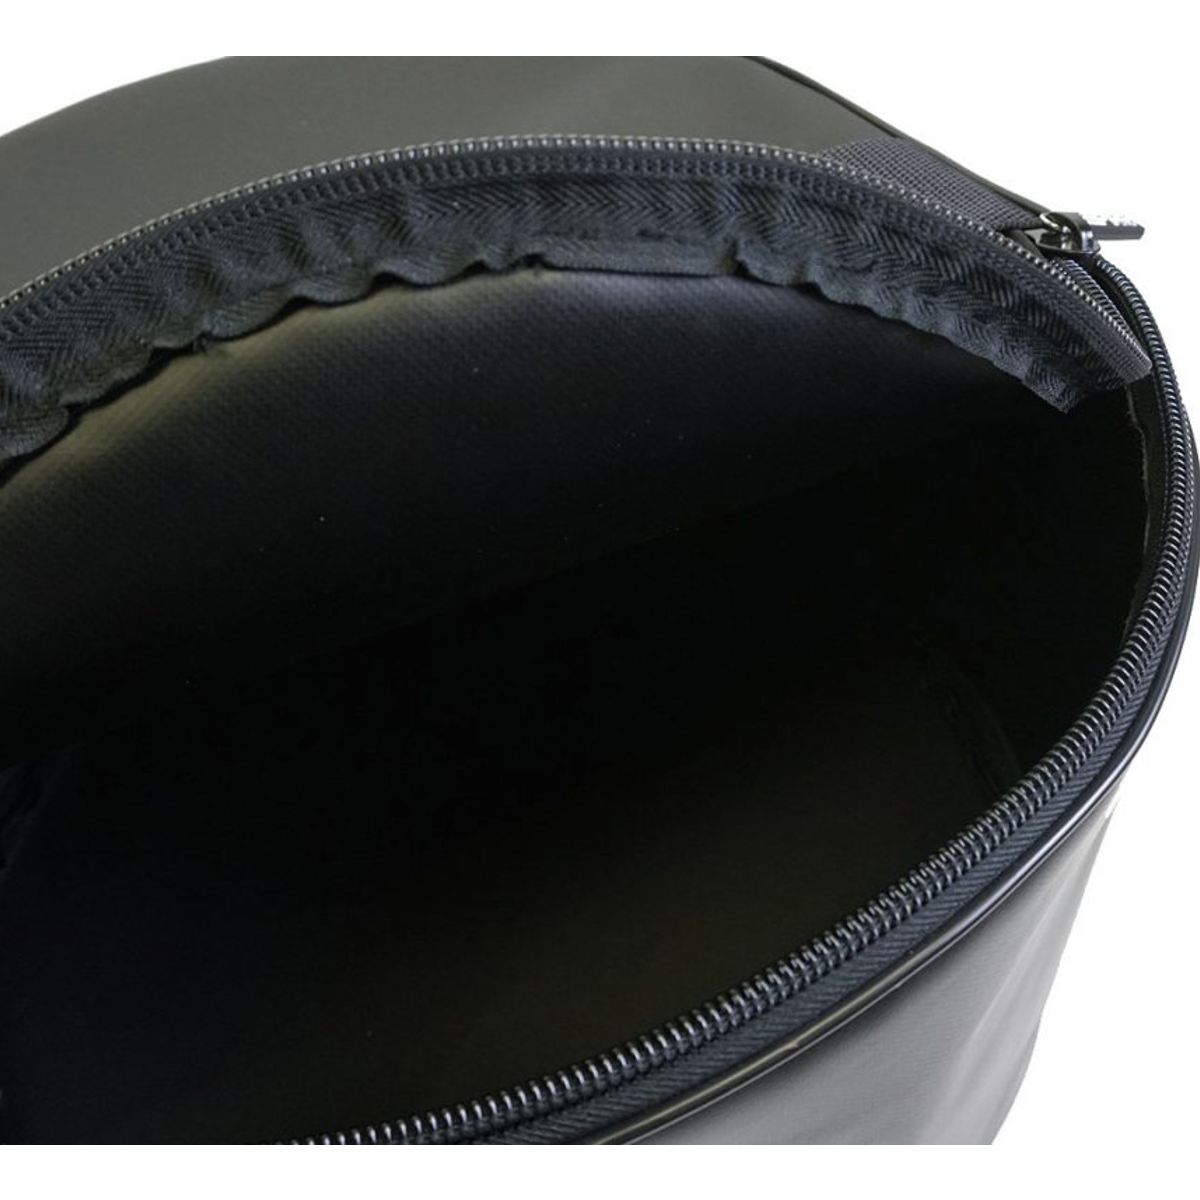 PRP Spare Tire Bag and Spare Drive Belt Bag for UTV's - BUNDLE